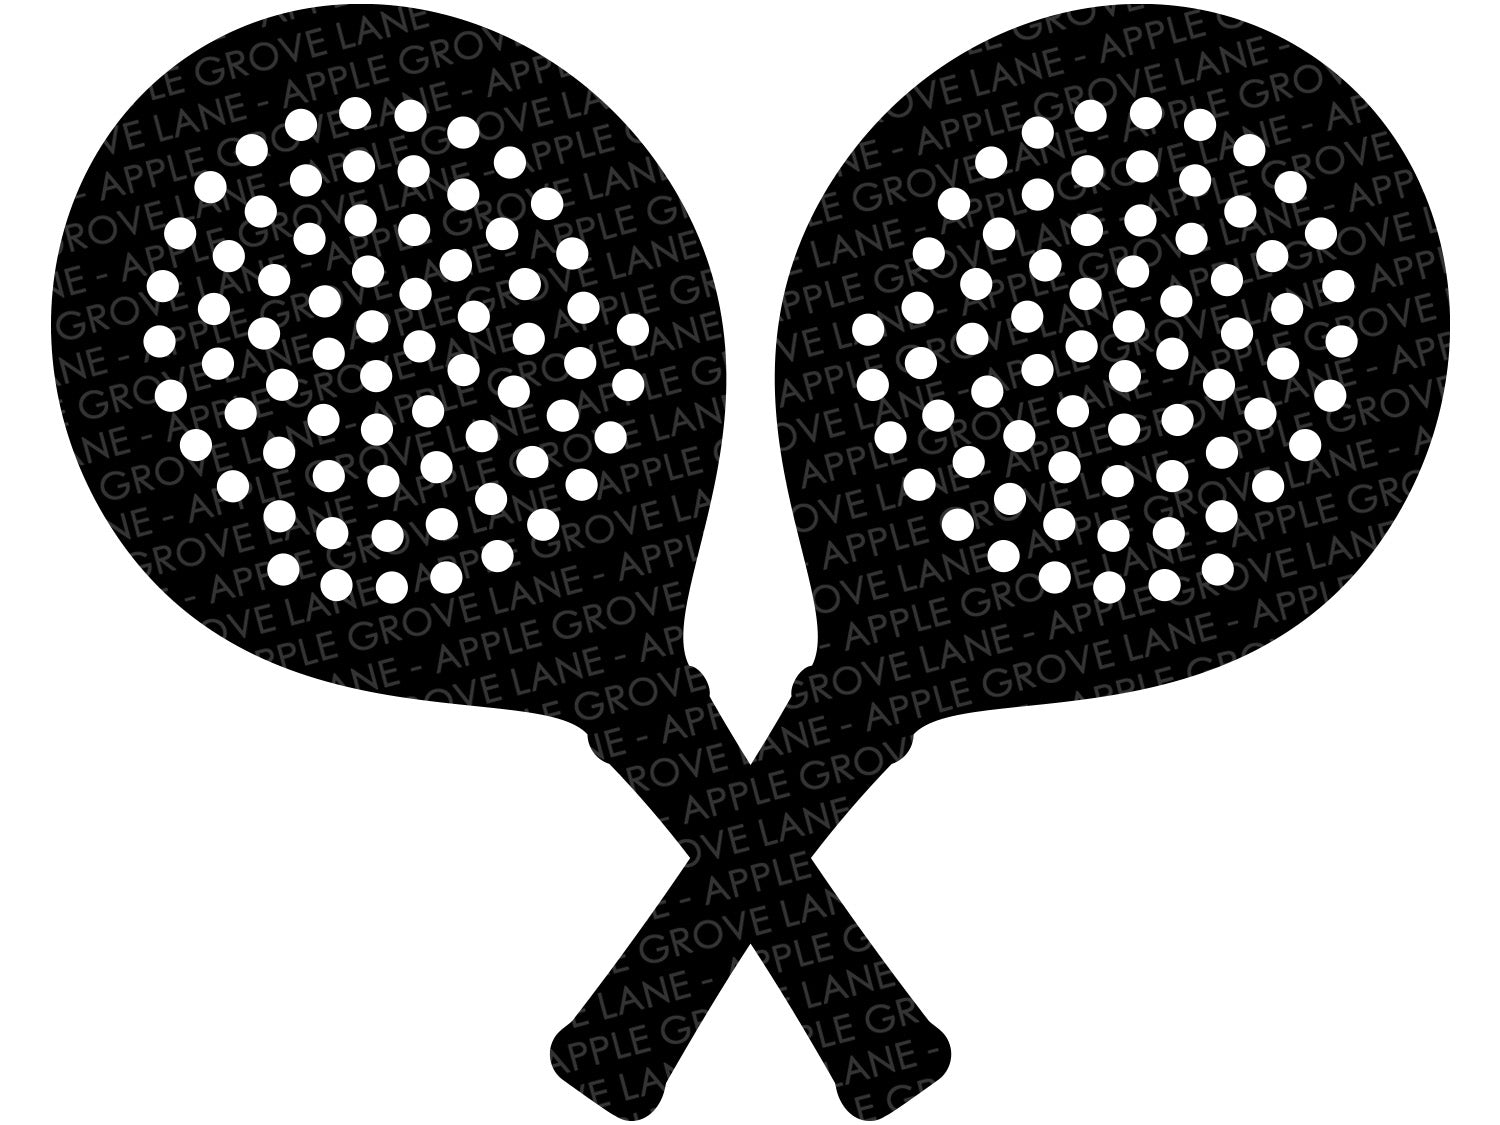 Platform Tennis Svg - Platform Tennis Paddle Svg - Tennis Svg - Sports Svg - Platform Tennis Png - Tennis Racket Svg - Tennis Player